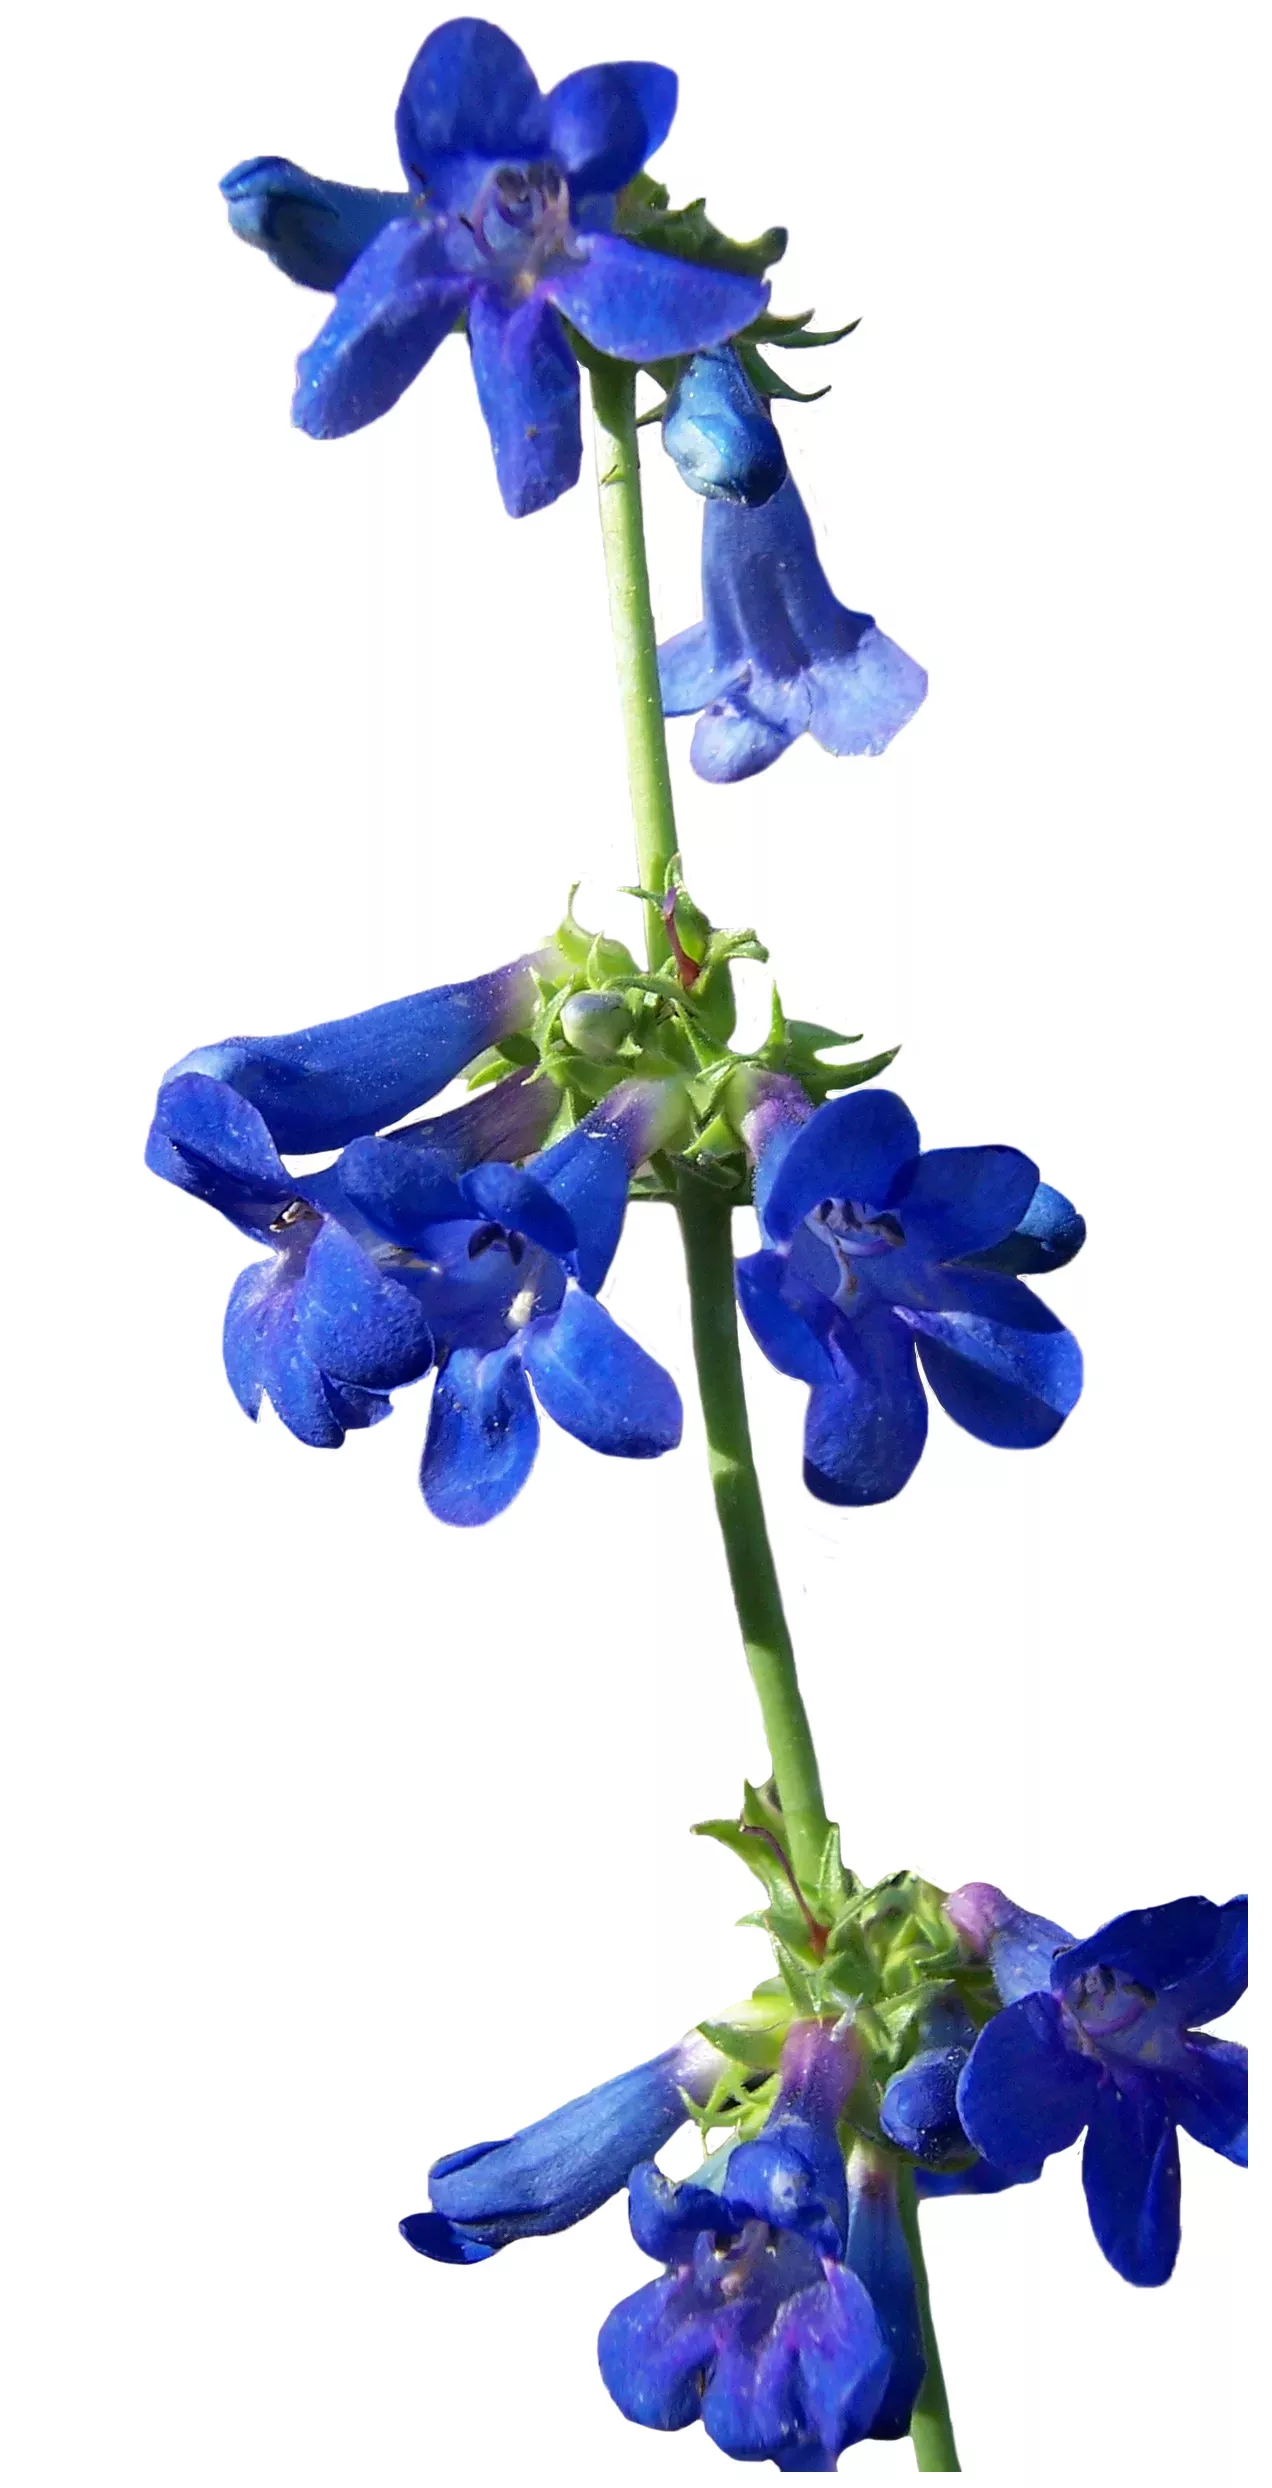 Bright blue flowers of grand mesa beardtongue